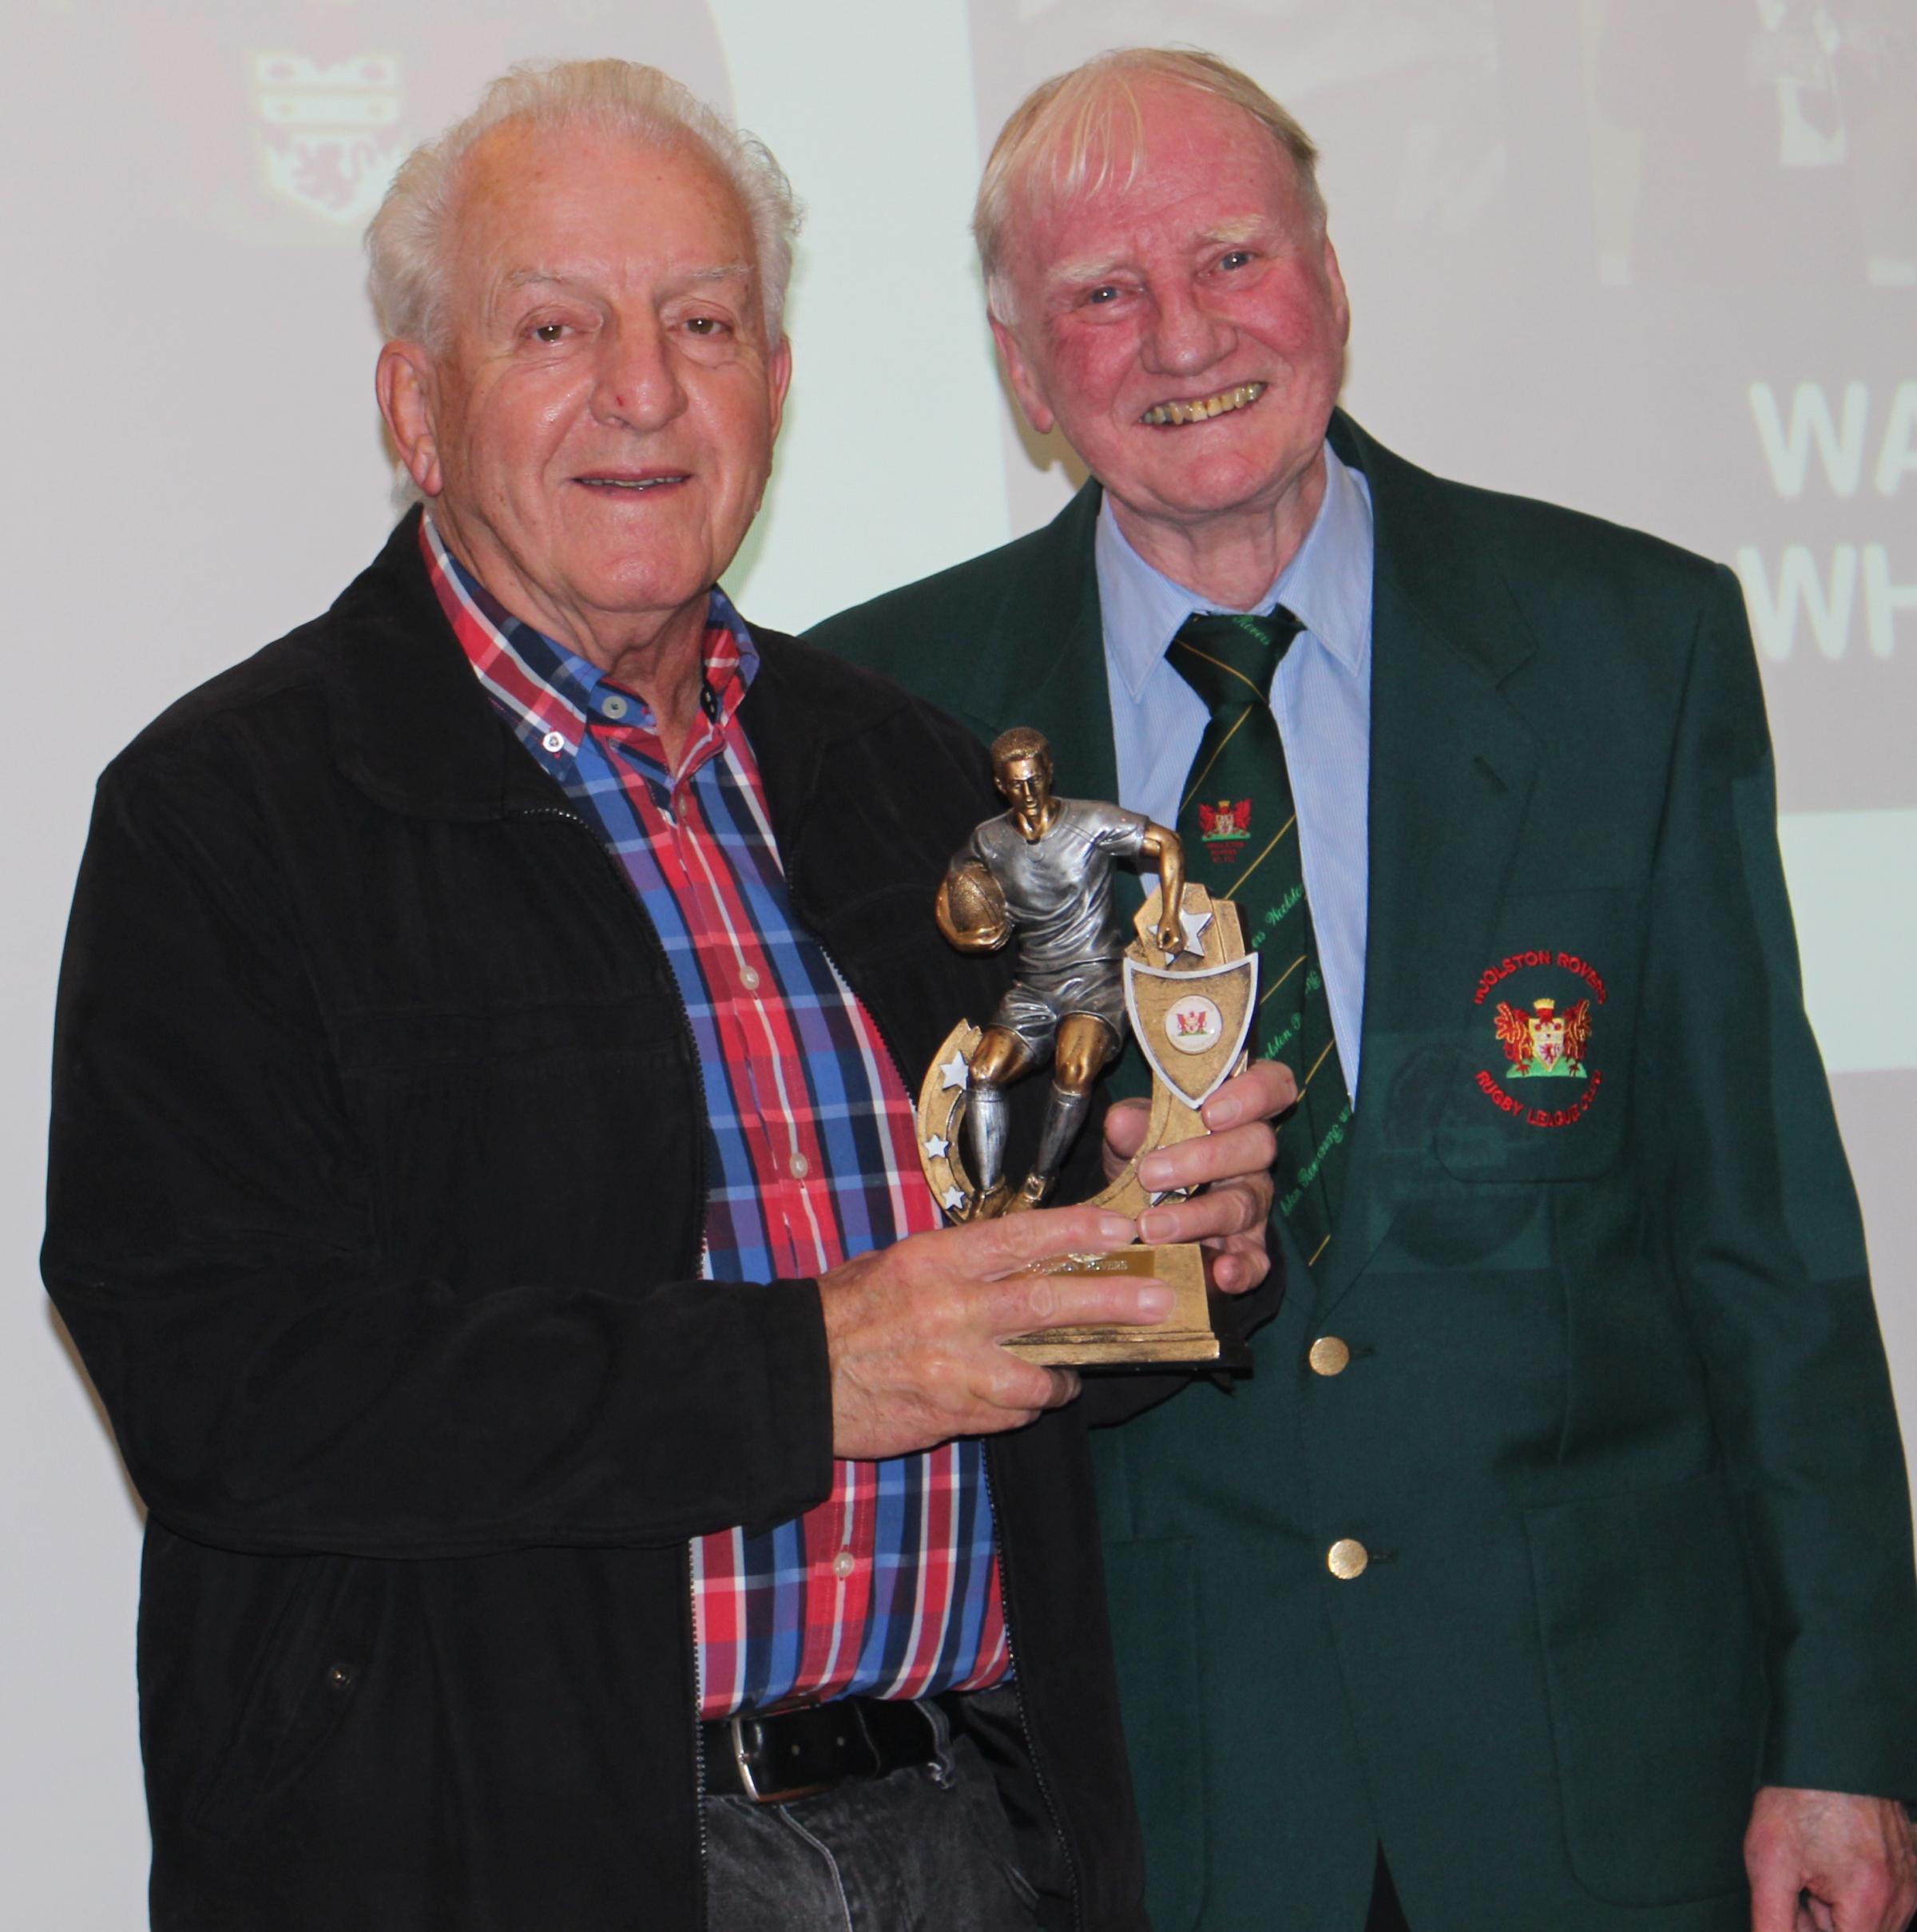 Club president Harry Crank presents the Presidents Award to Warren Whalley